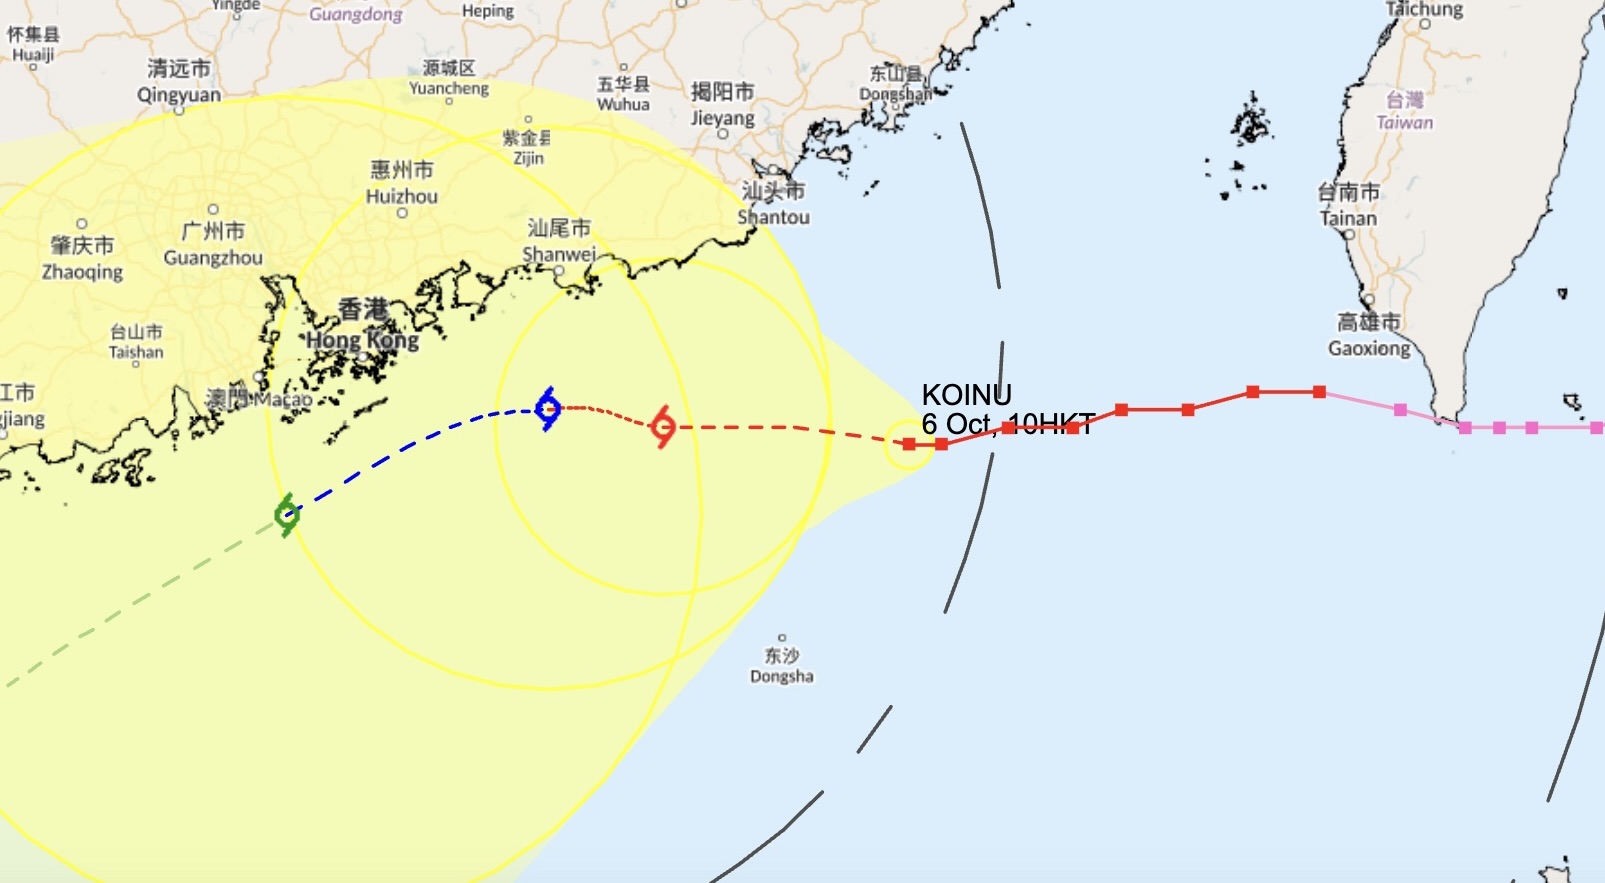 current track of typhoon koinu